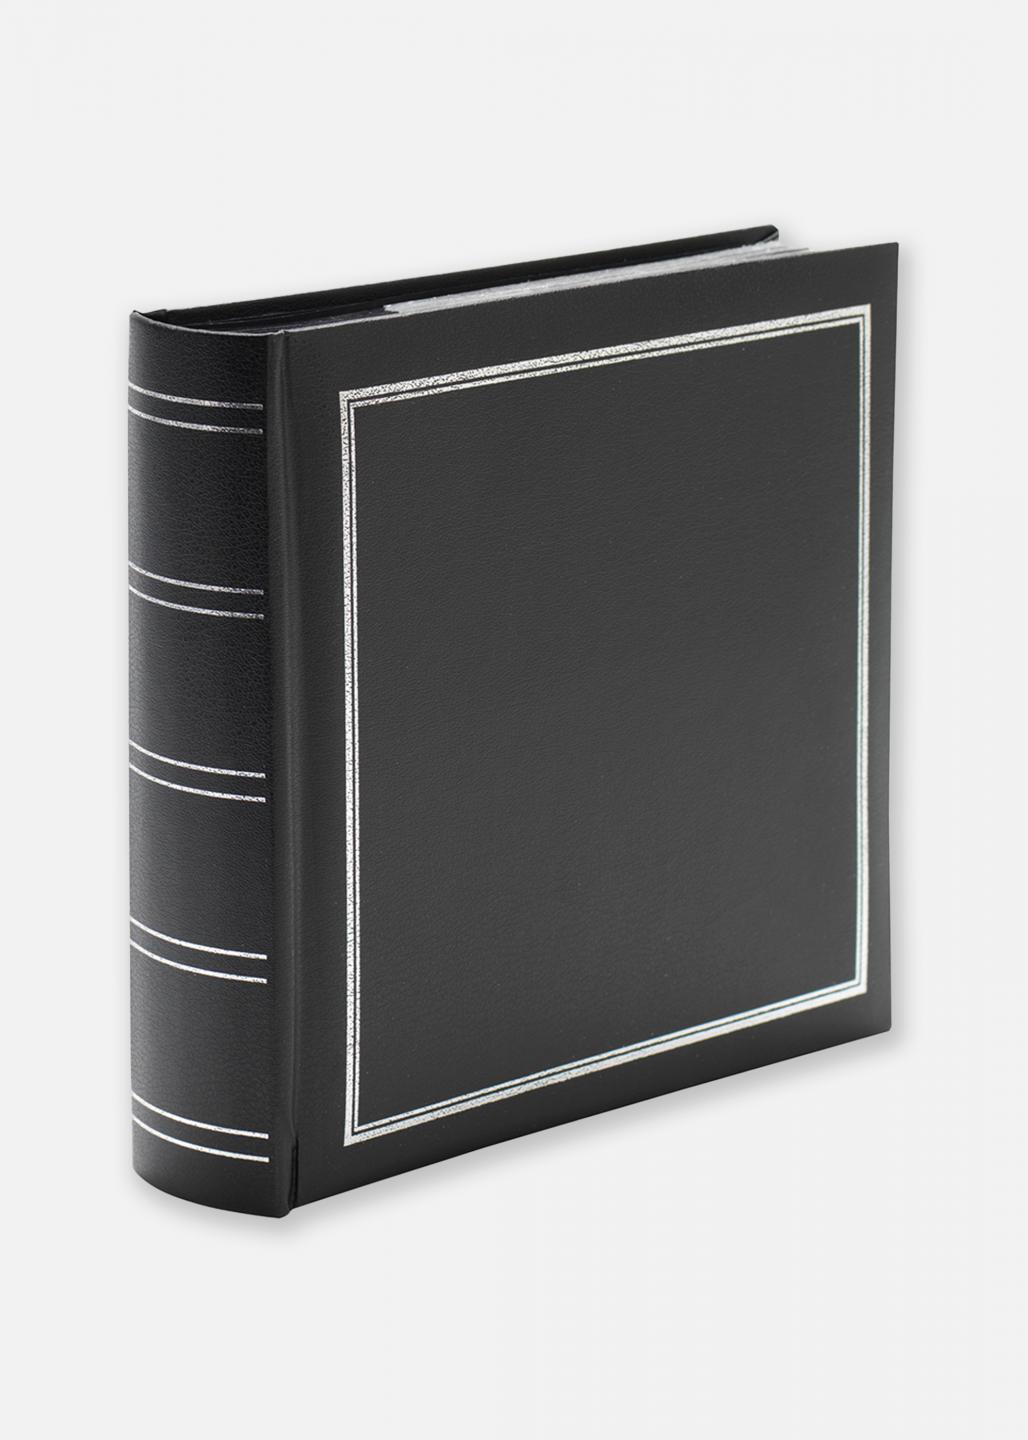 Buy Album sheets Timesaver SA4 - 30 Black sheets here 